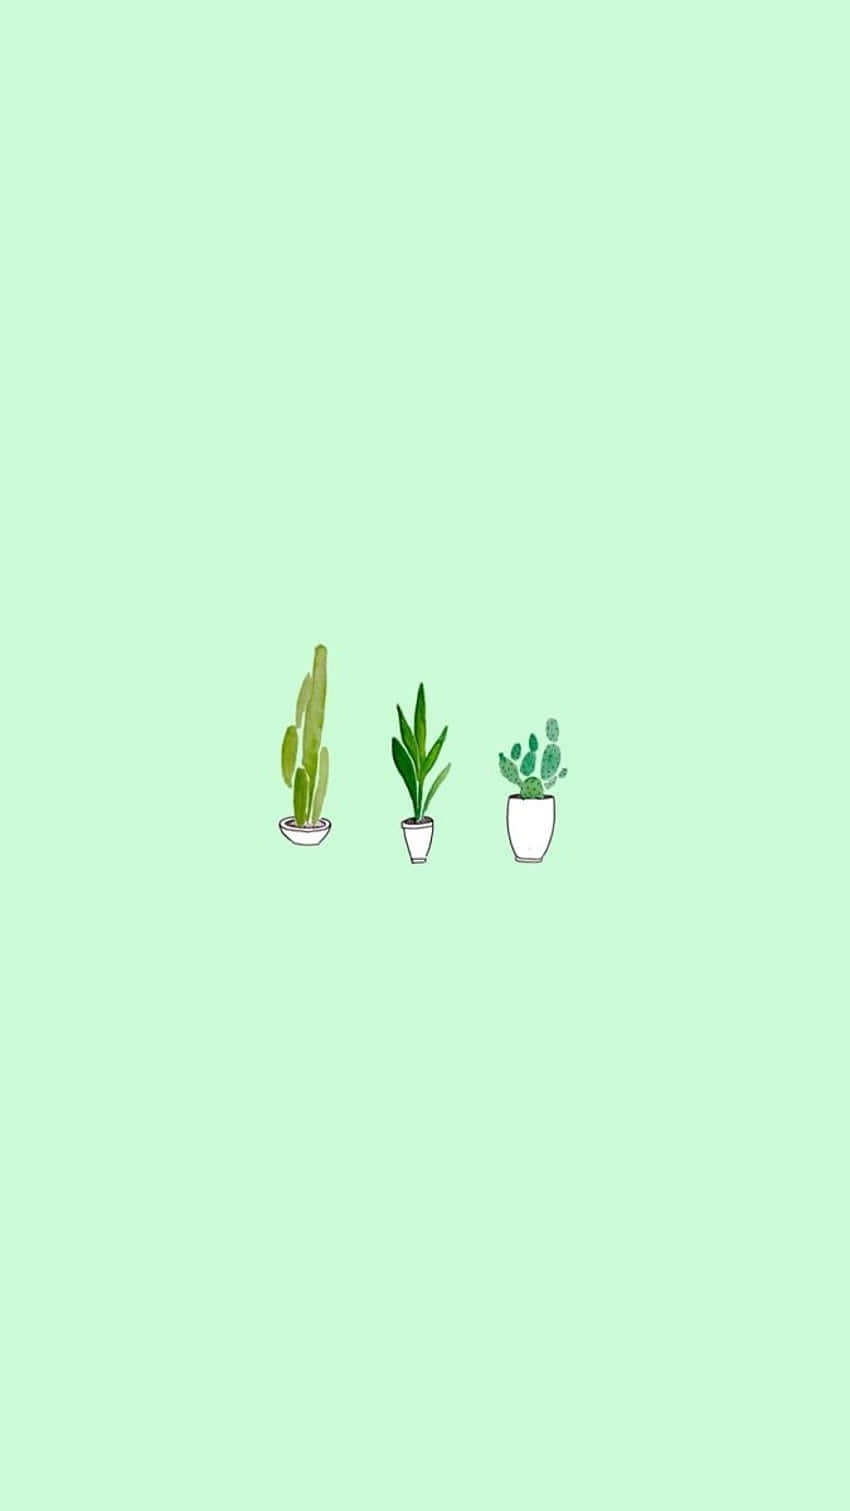 Green Preppy Potted Plants Illustration Wallpaper